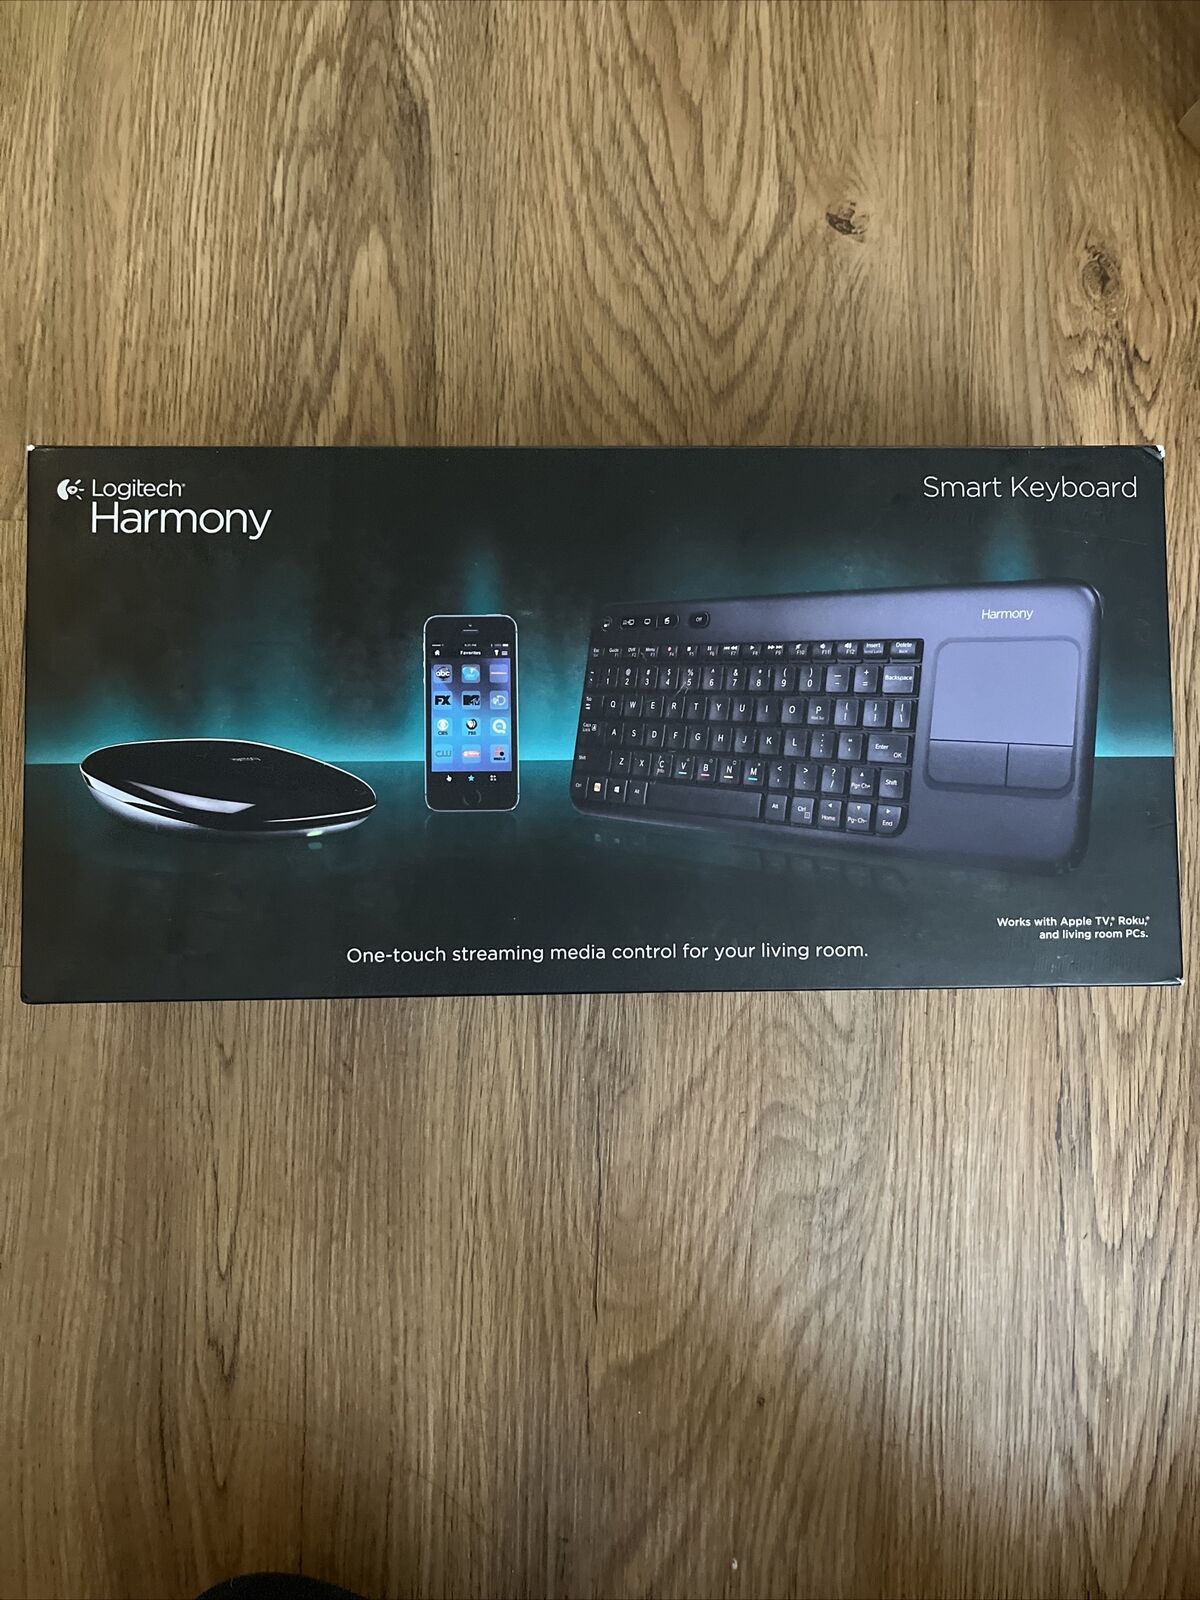 Logitech Harmony Smart Keyboard with Hub USB dongles and original box